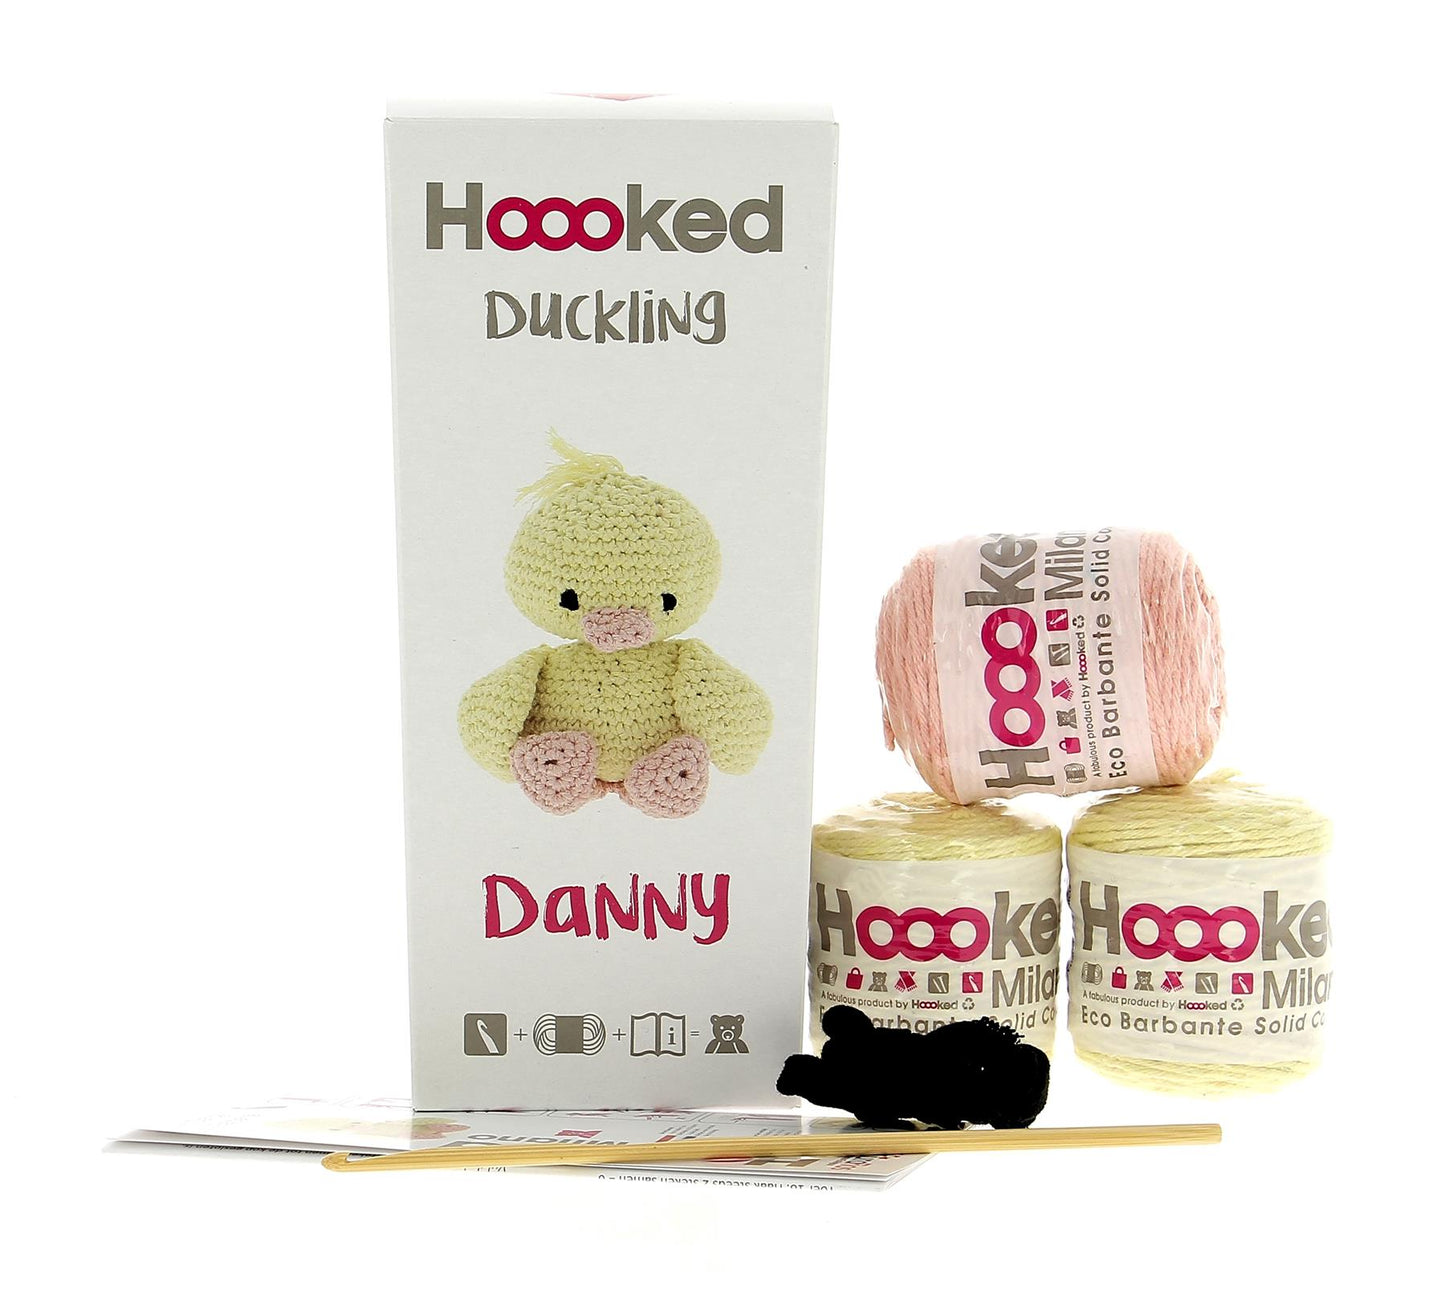 [Hoooked] PAK131 Eco Barbante Milano Popcorn Cotton Duckling Danny Crochet Amigurumi Kit